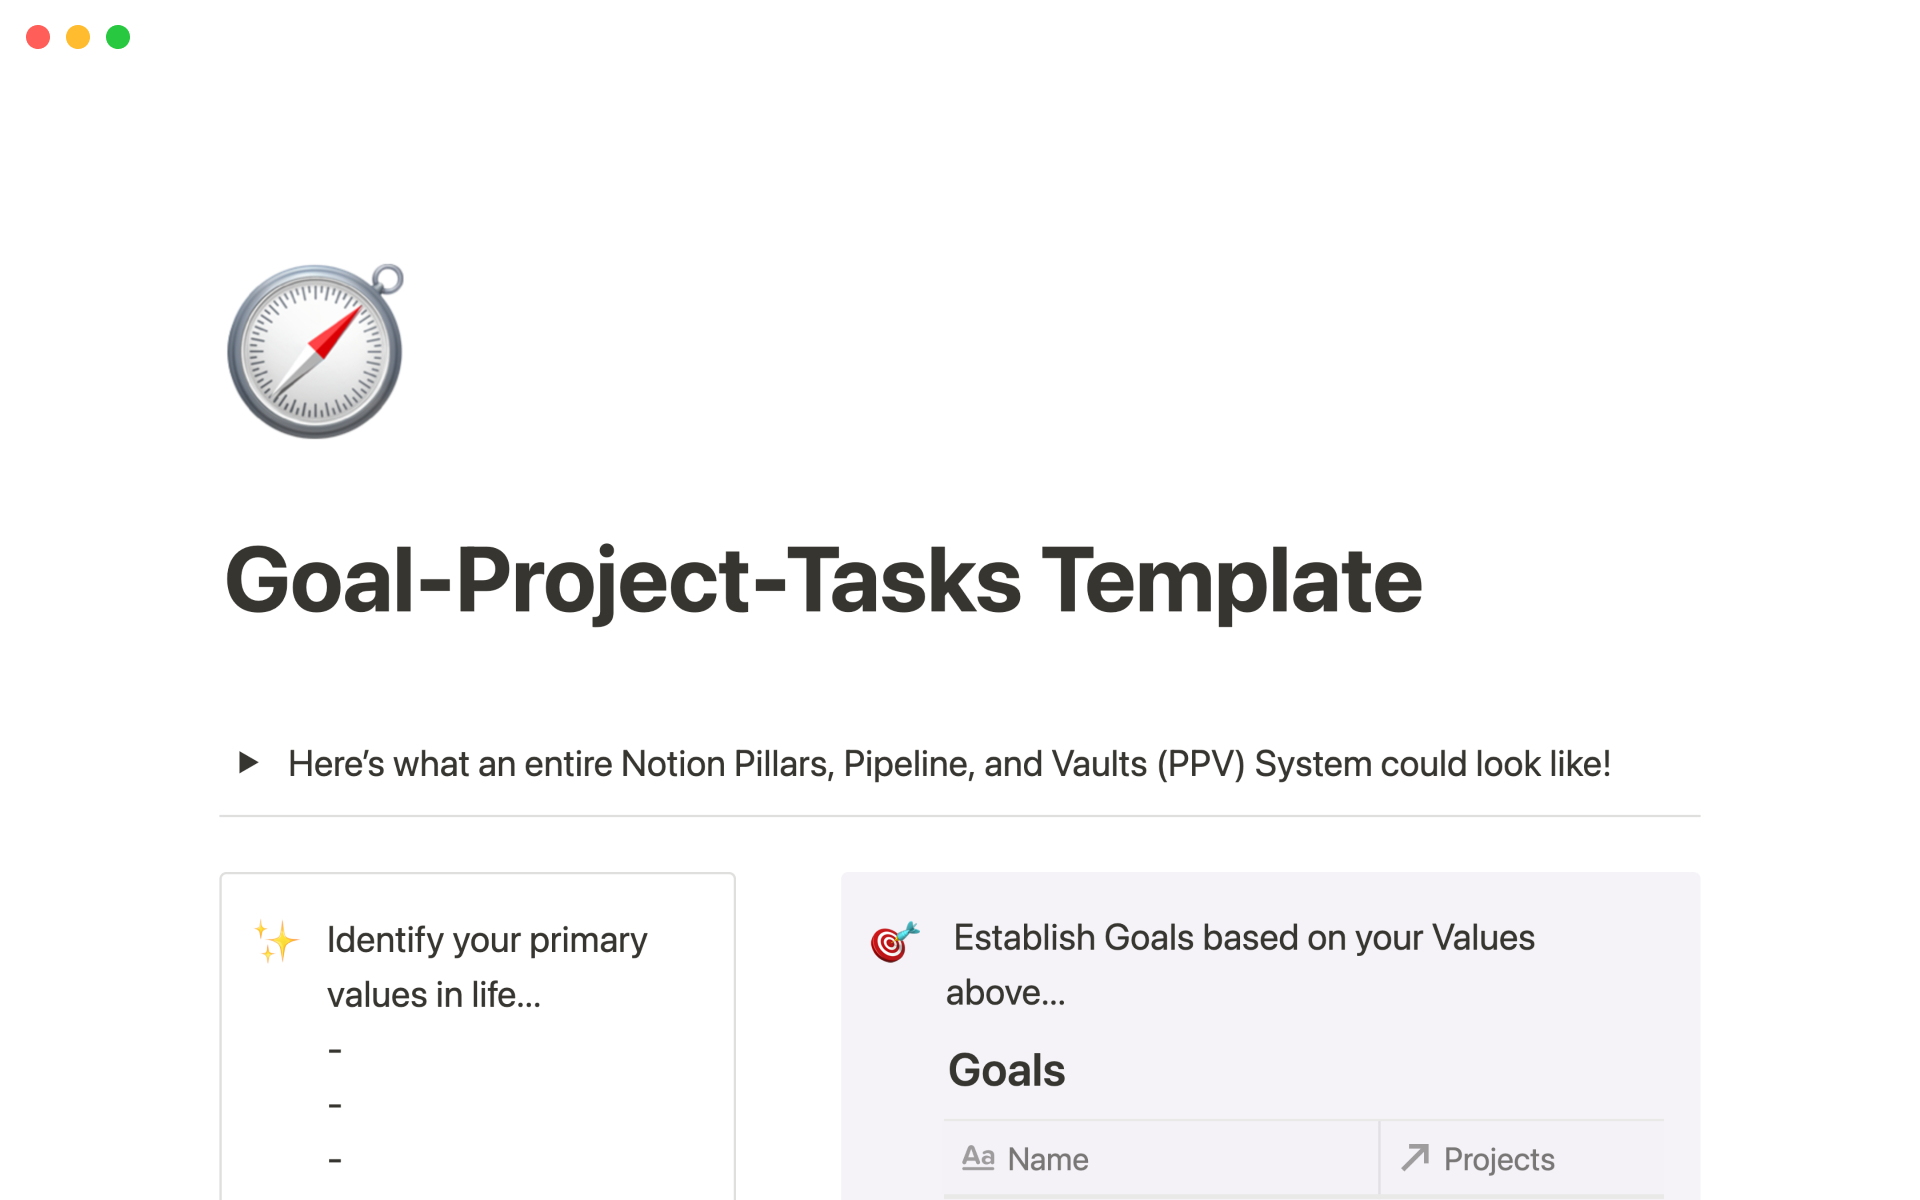 Aperçu du modèle de Goal-Project-Tasks Template